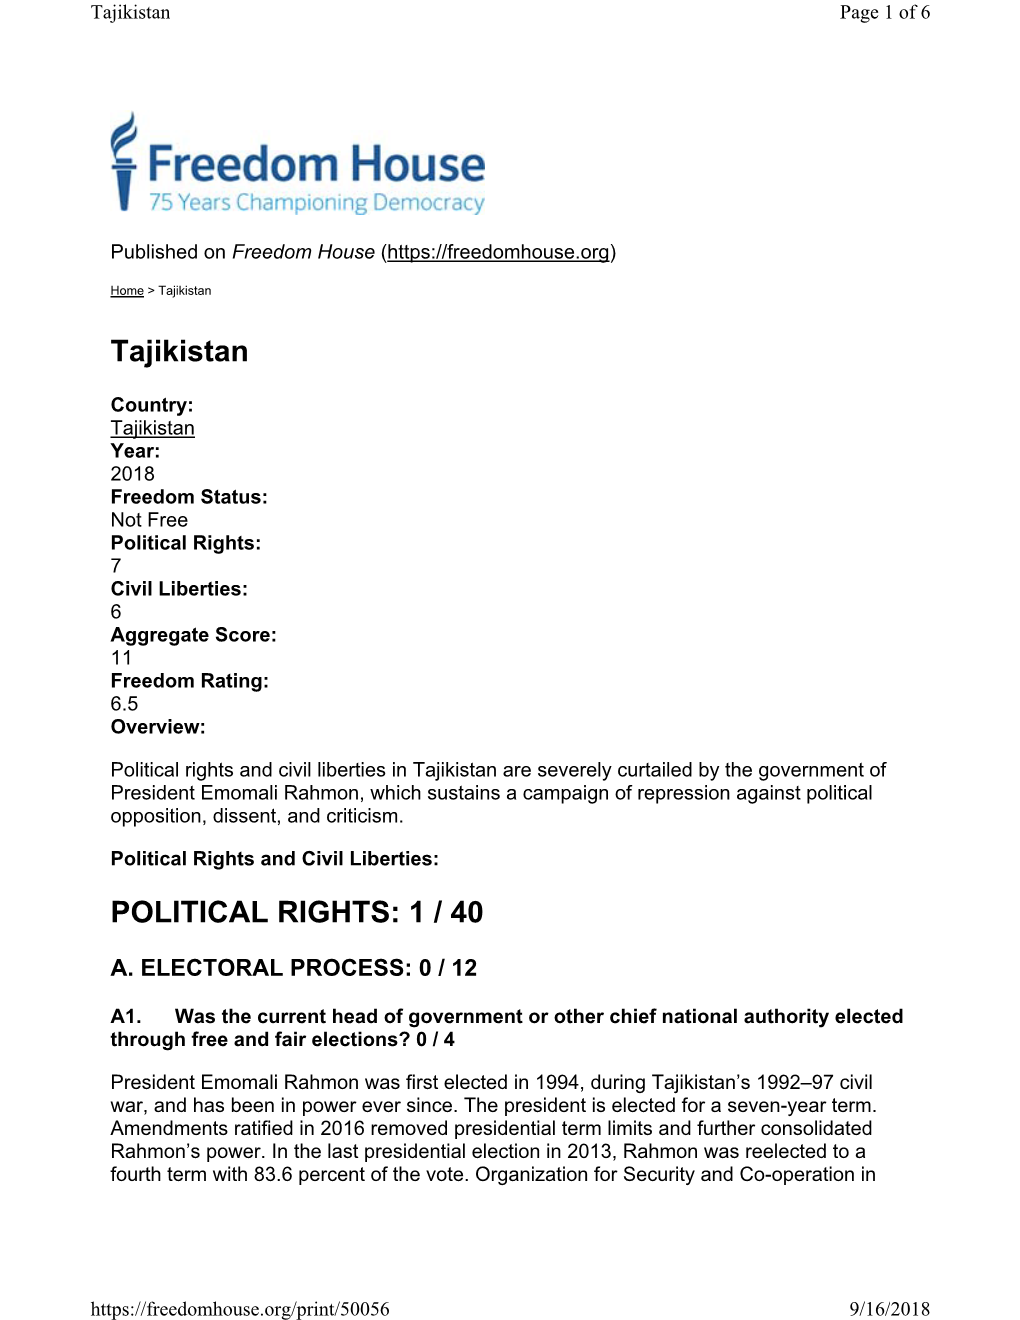 Tajikistan POLITICAL RIGHTS: 1 / 40